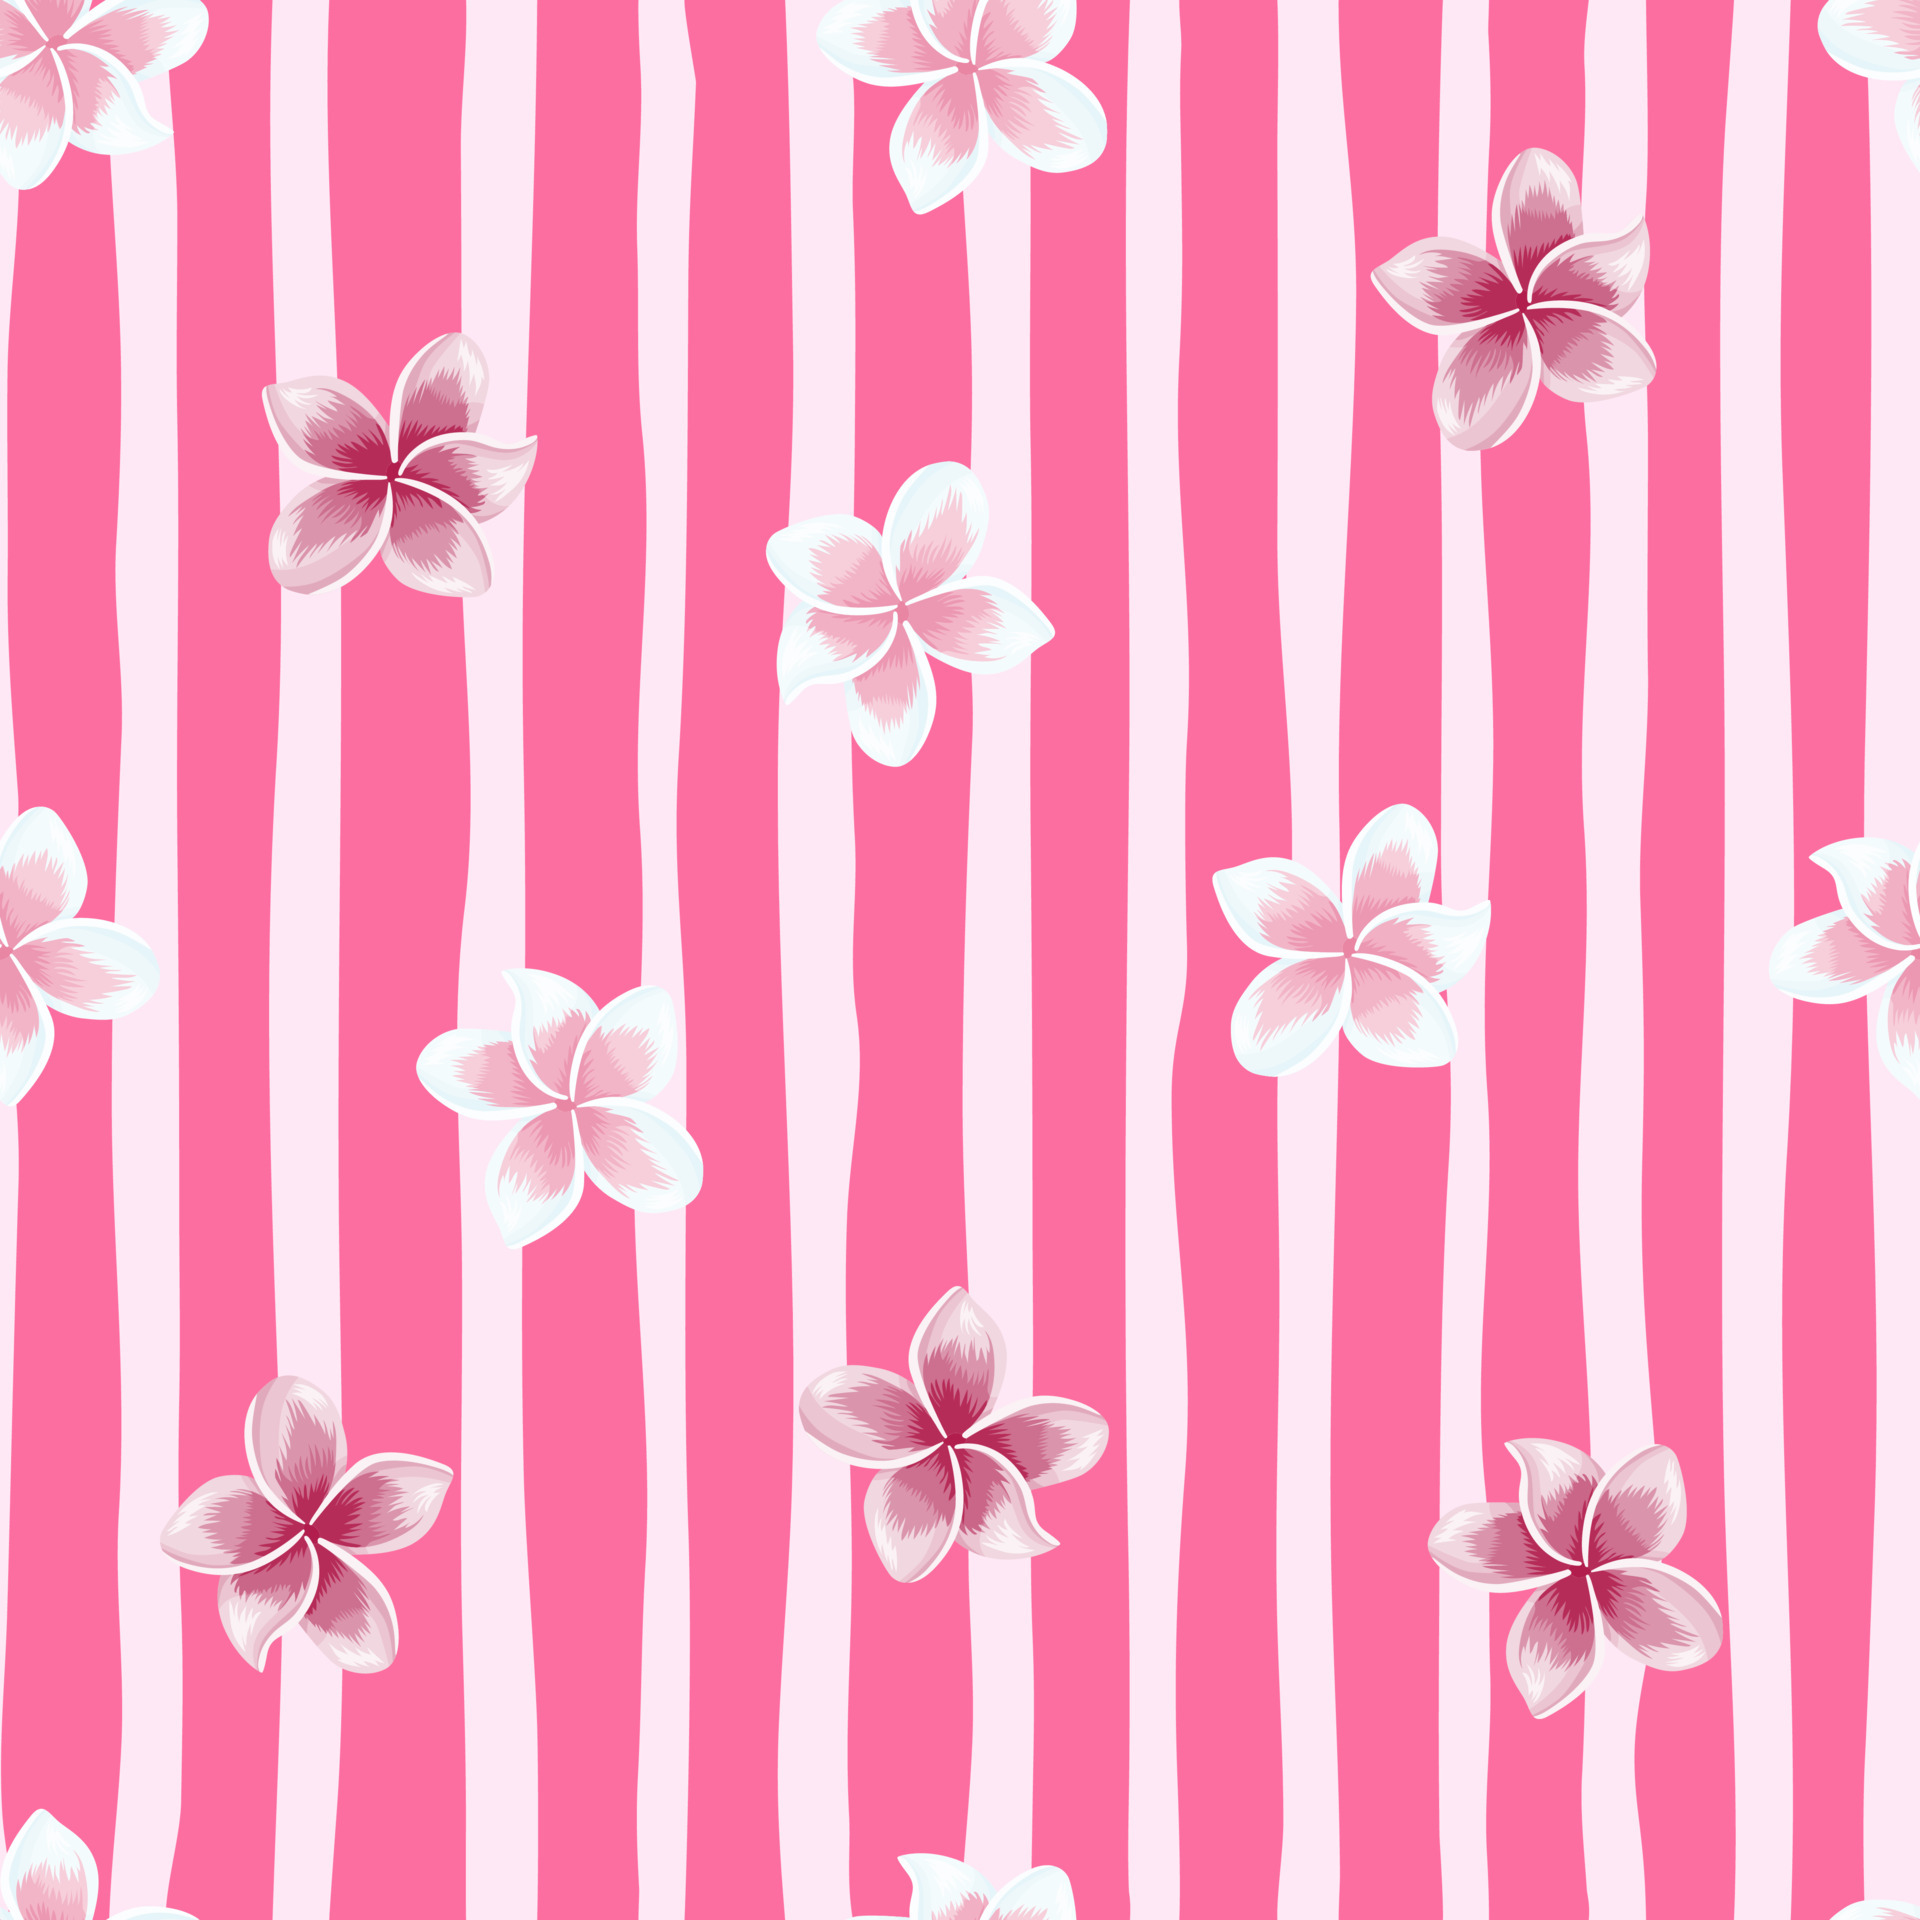 Cute plumeria flower seamless pattern on pink stripe background